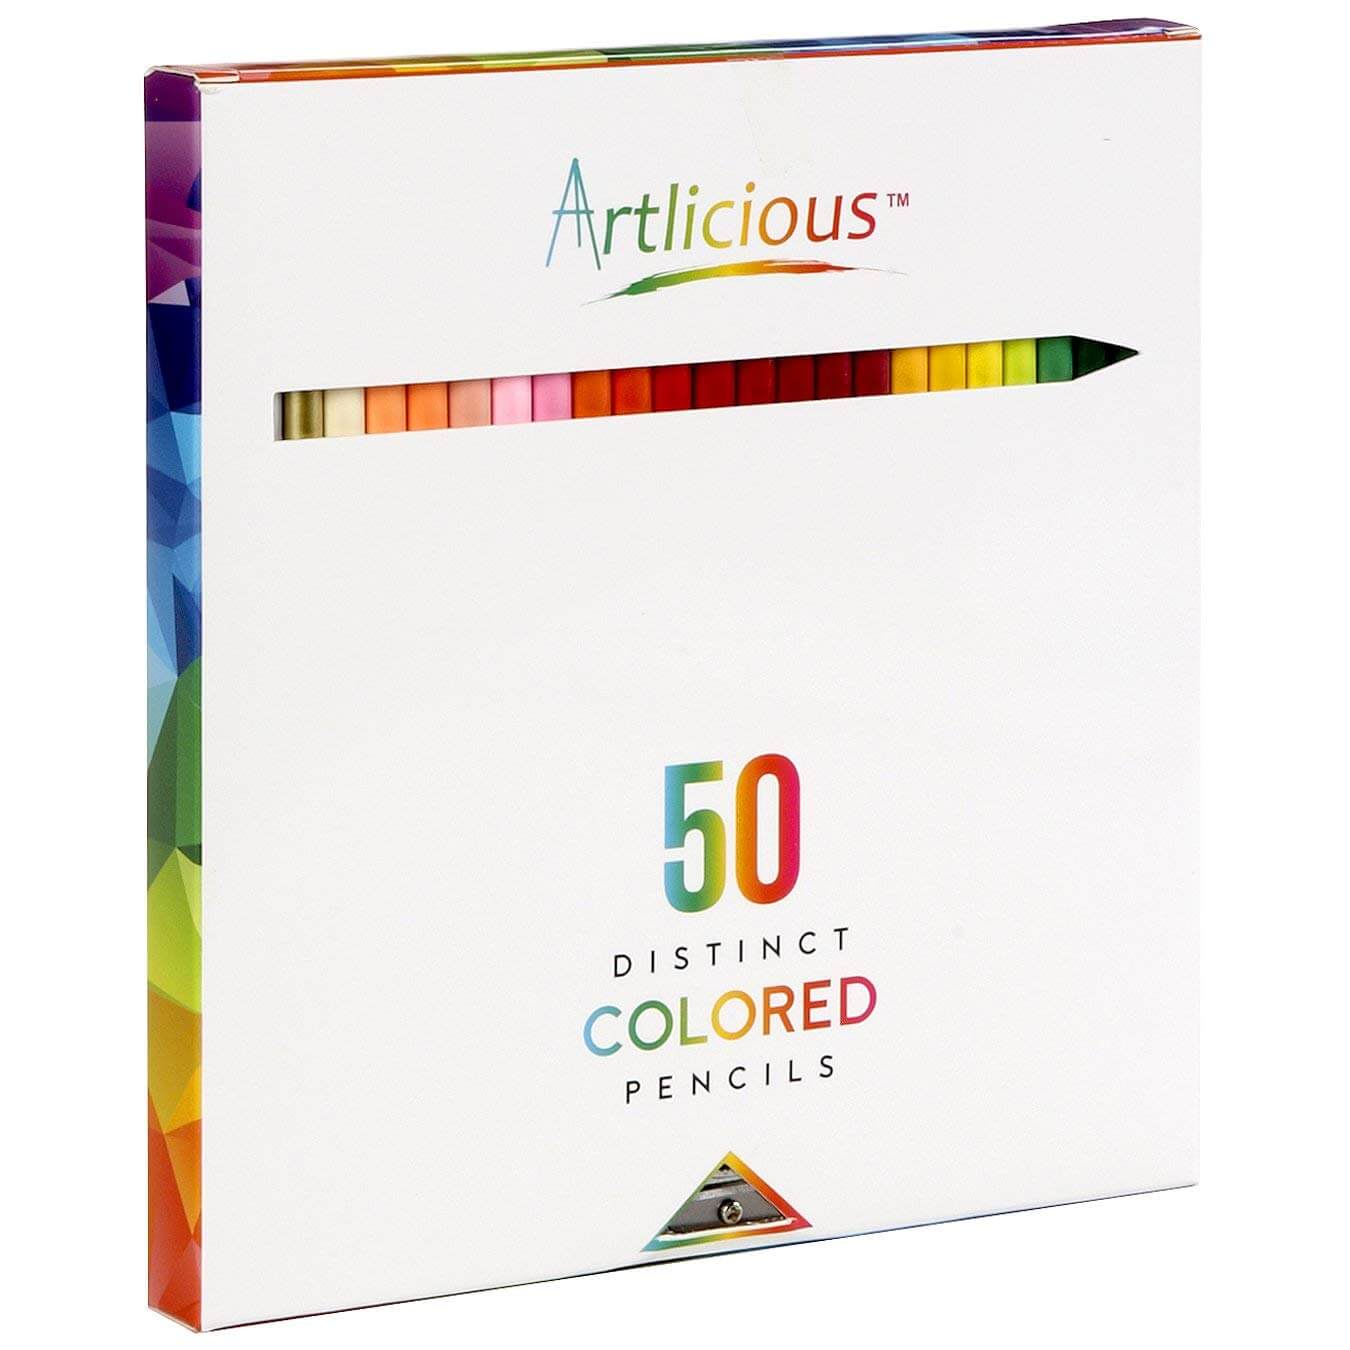 https://restylegraphic.com/wp-content/uploads/2019/05/Artlicious-50-Premium-Distinct-Colored-Pencils.jpg